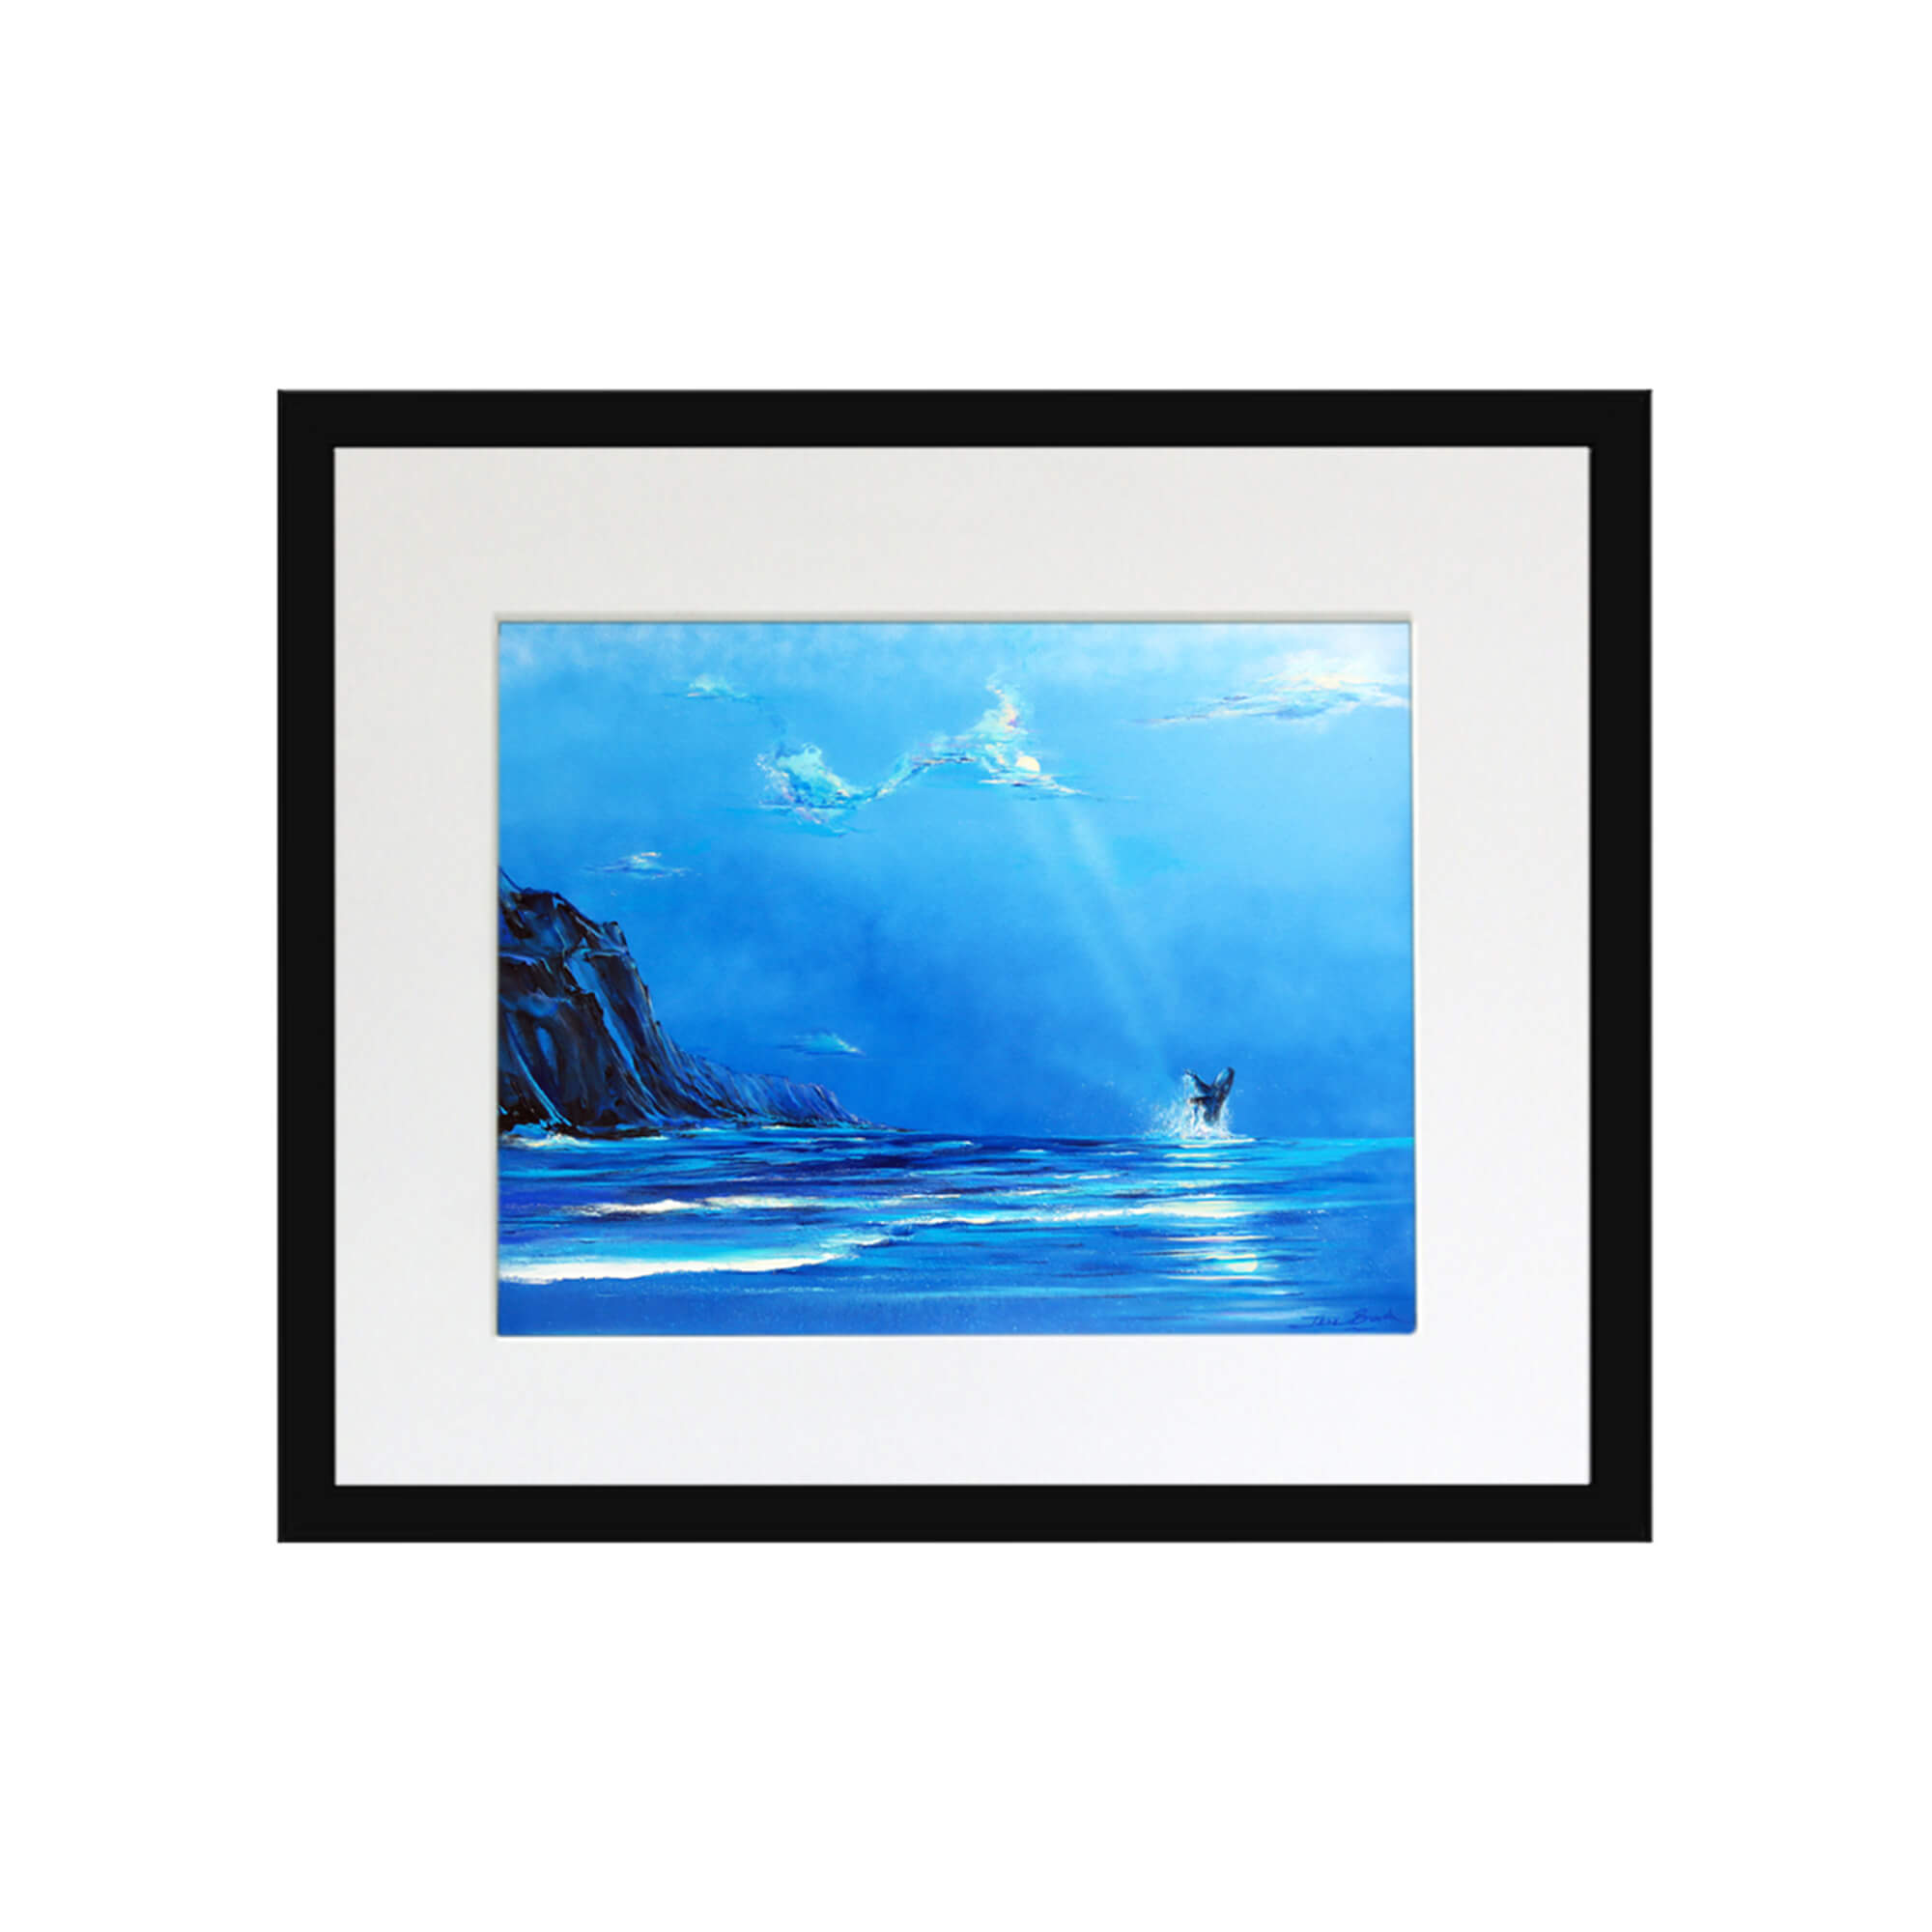 Blue-hued seascape by Hawaii artist Jess Burda